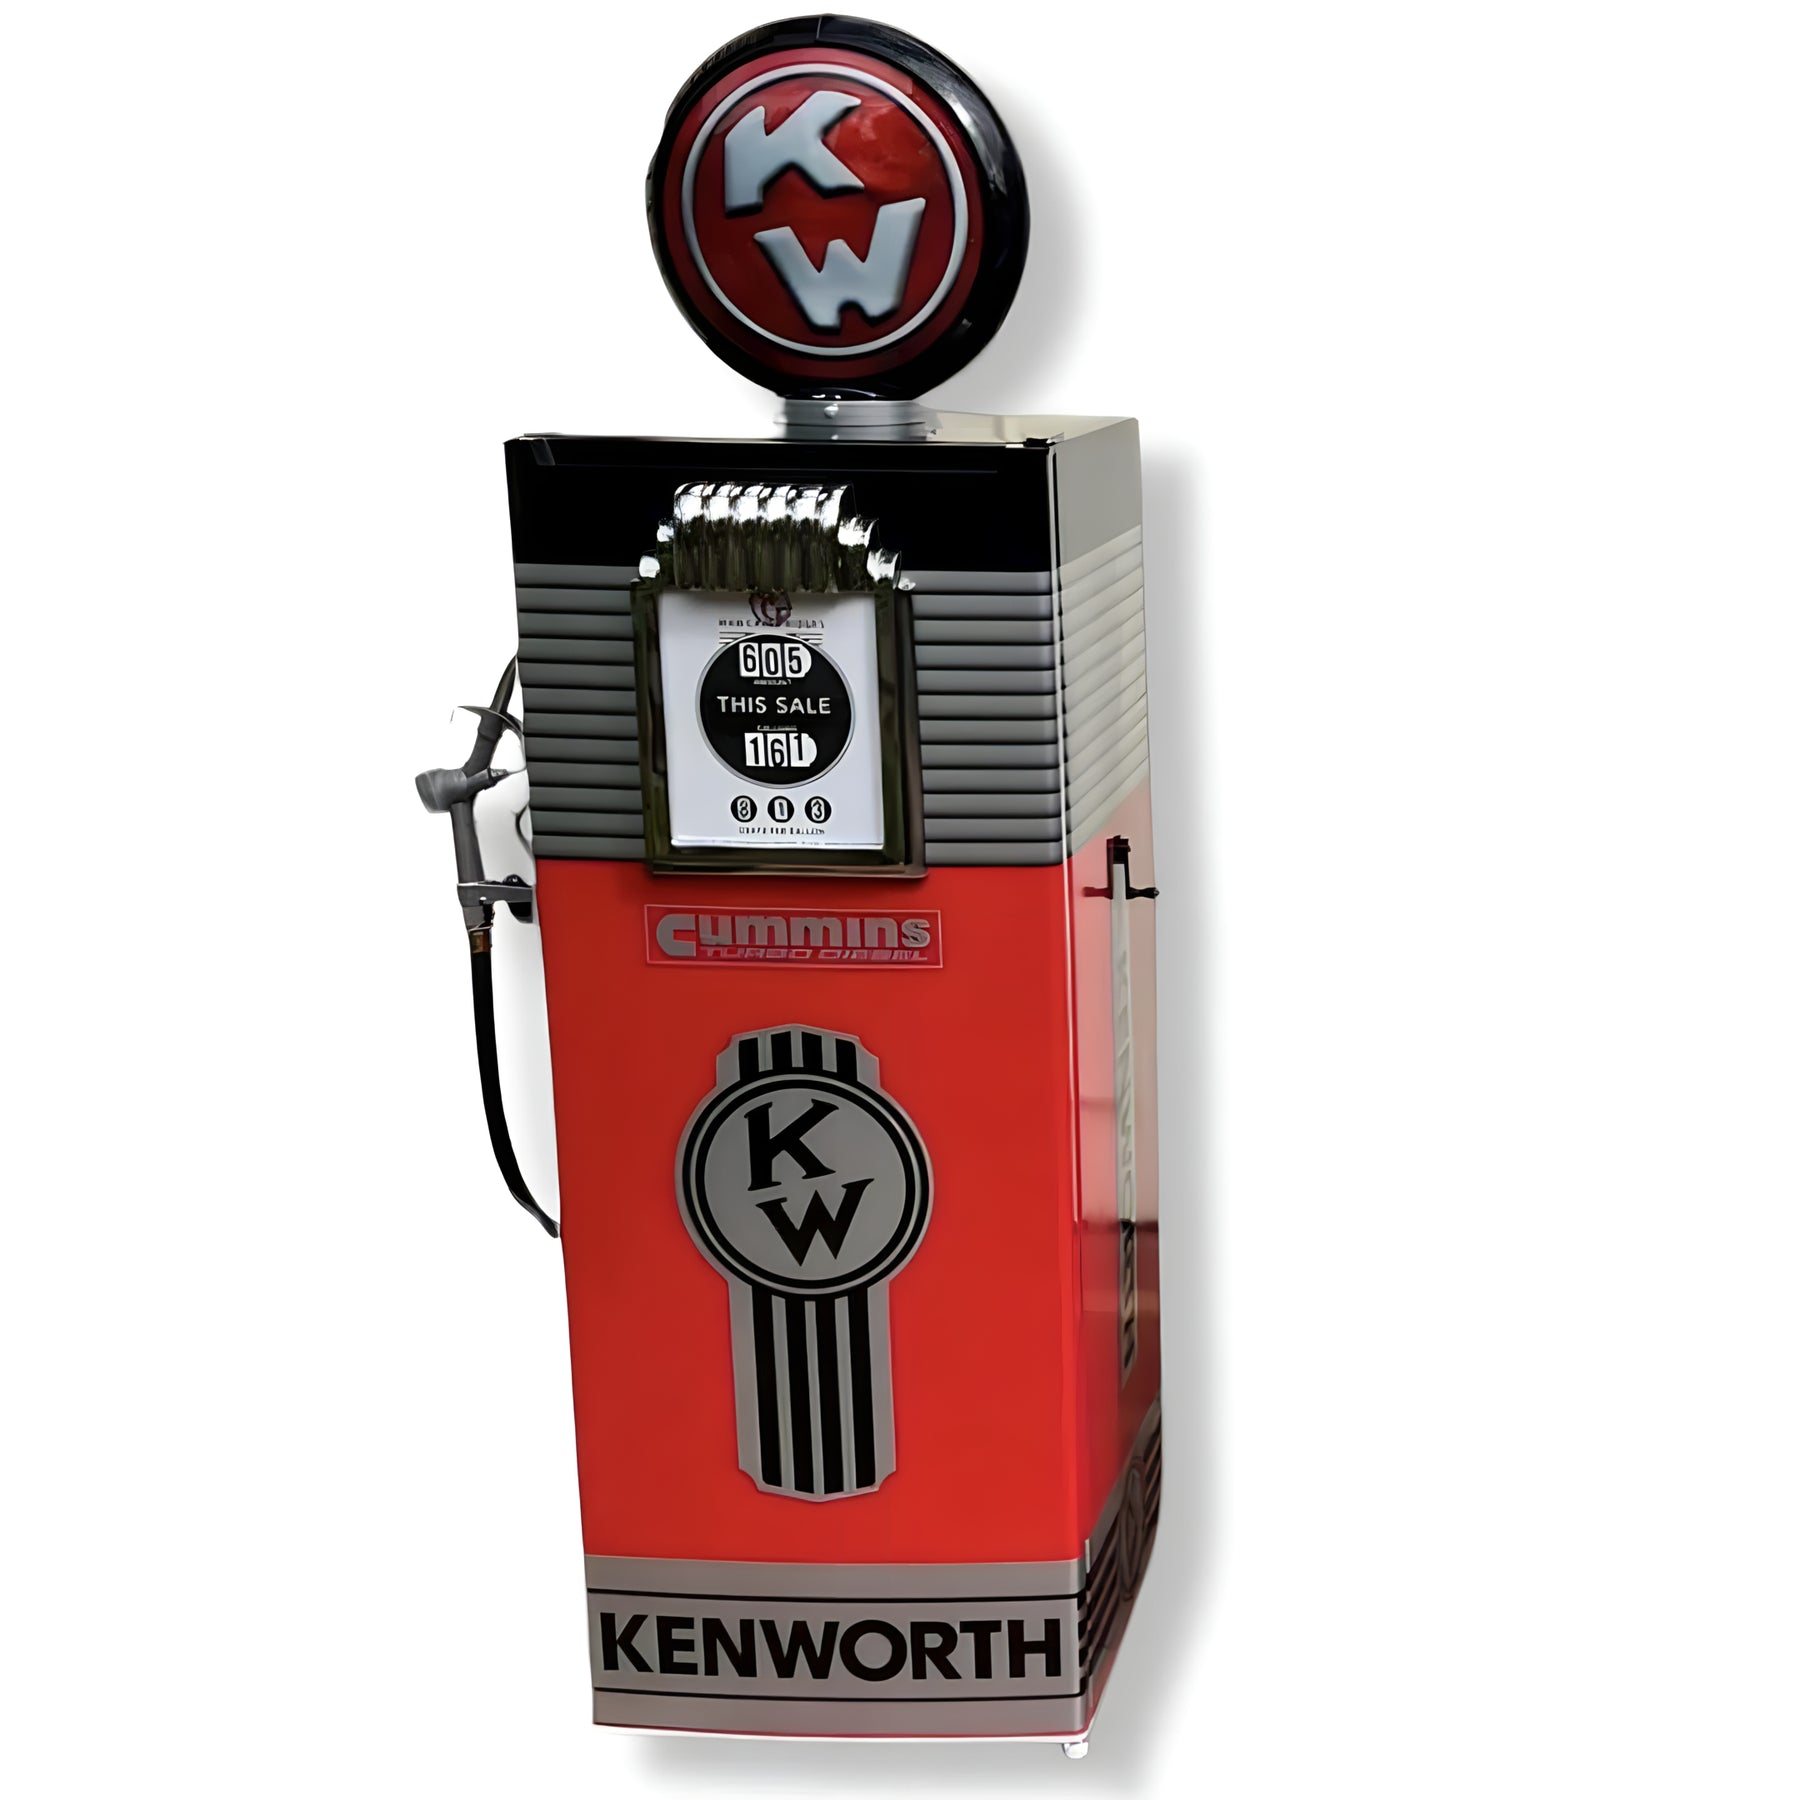 Kenworth Retro Petrol Bowser Fridge